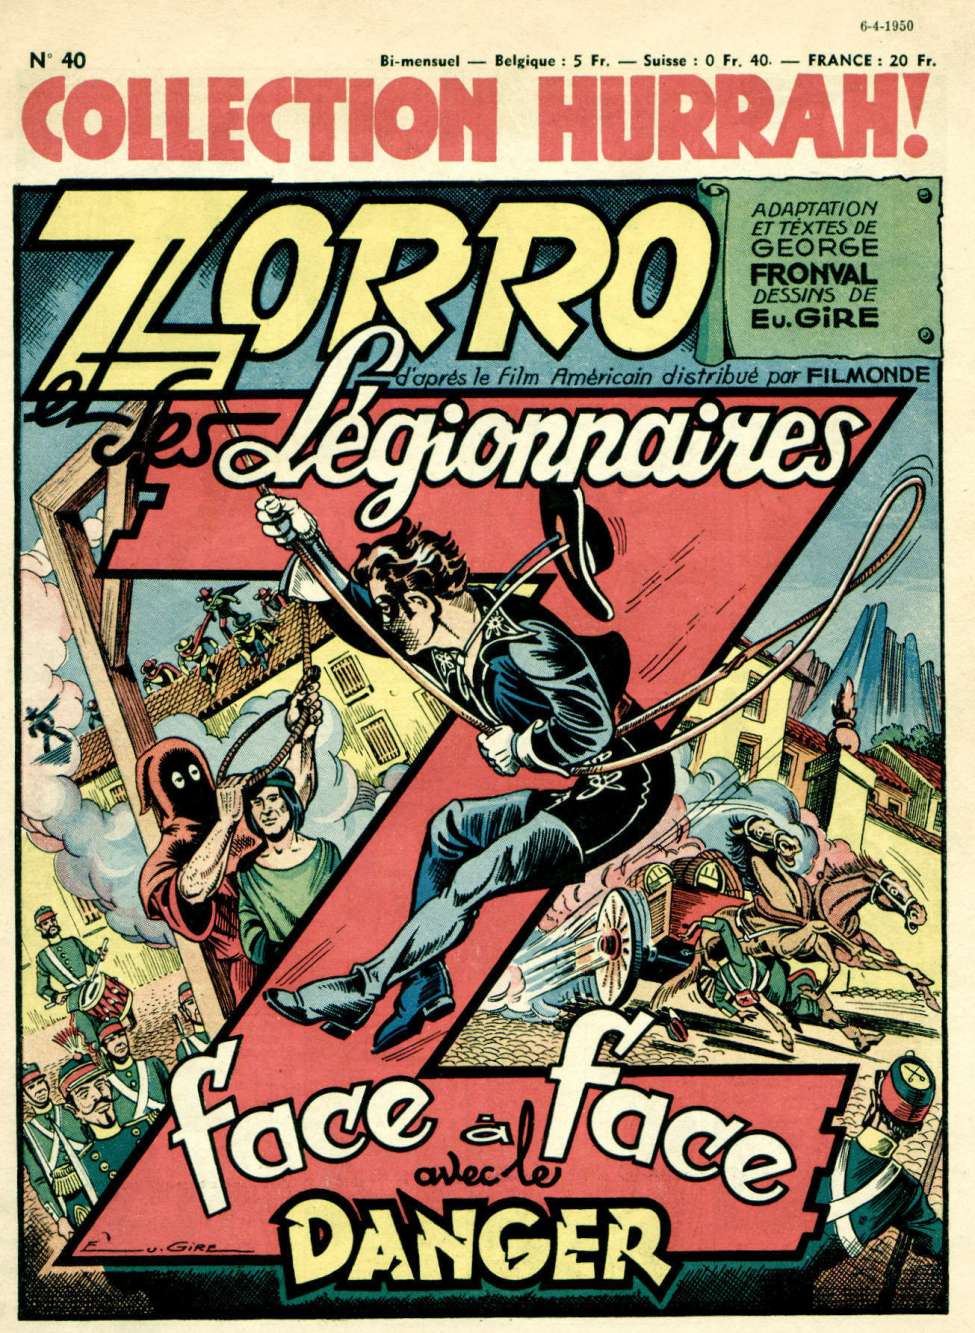 Comic Book Cover For Collection Hurrah - 40 - Zorro et ses legionnaires